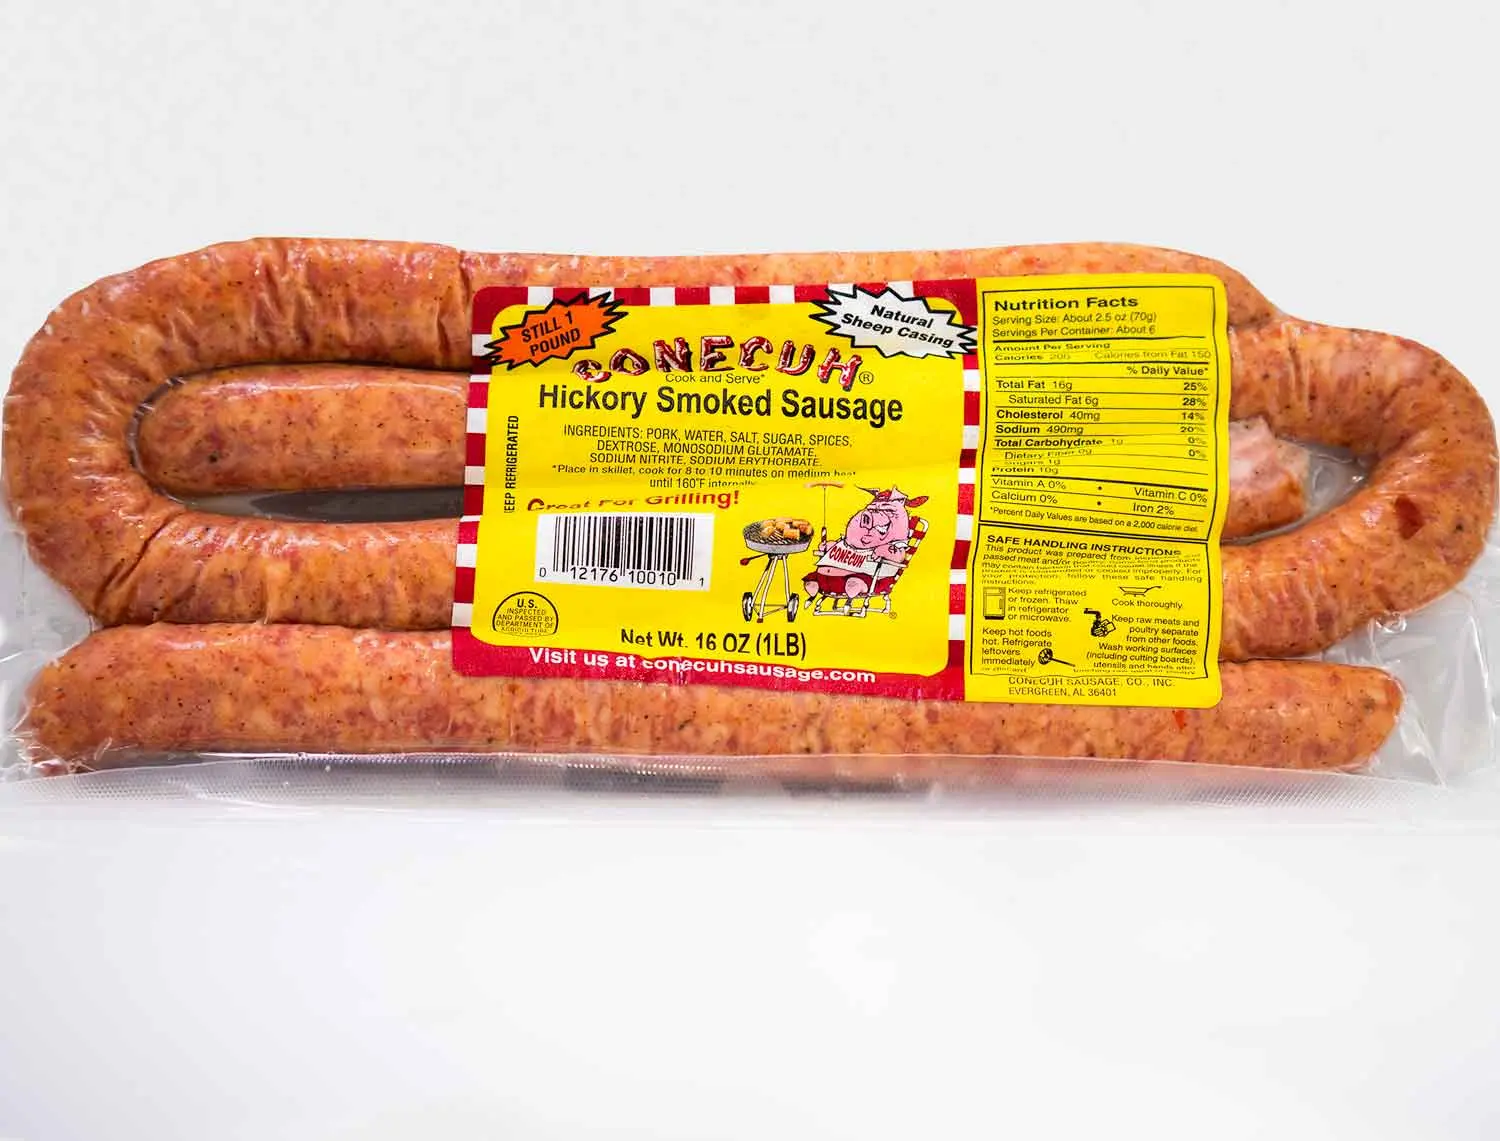 like smoked sausage - What is similar to sausage